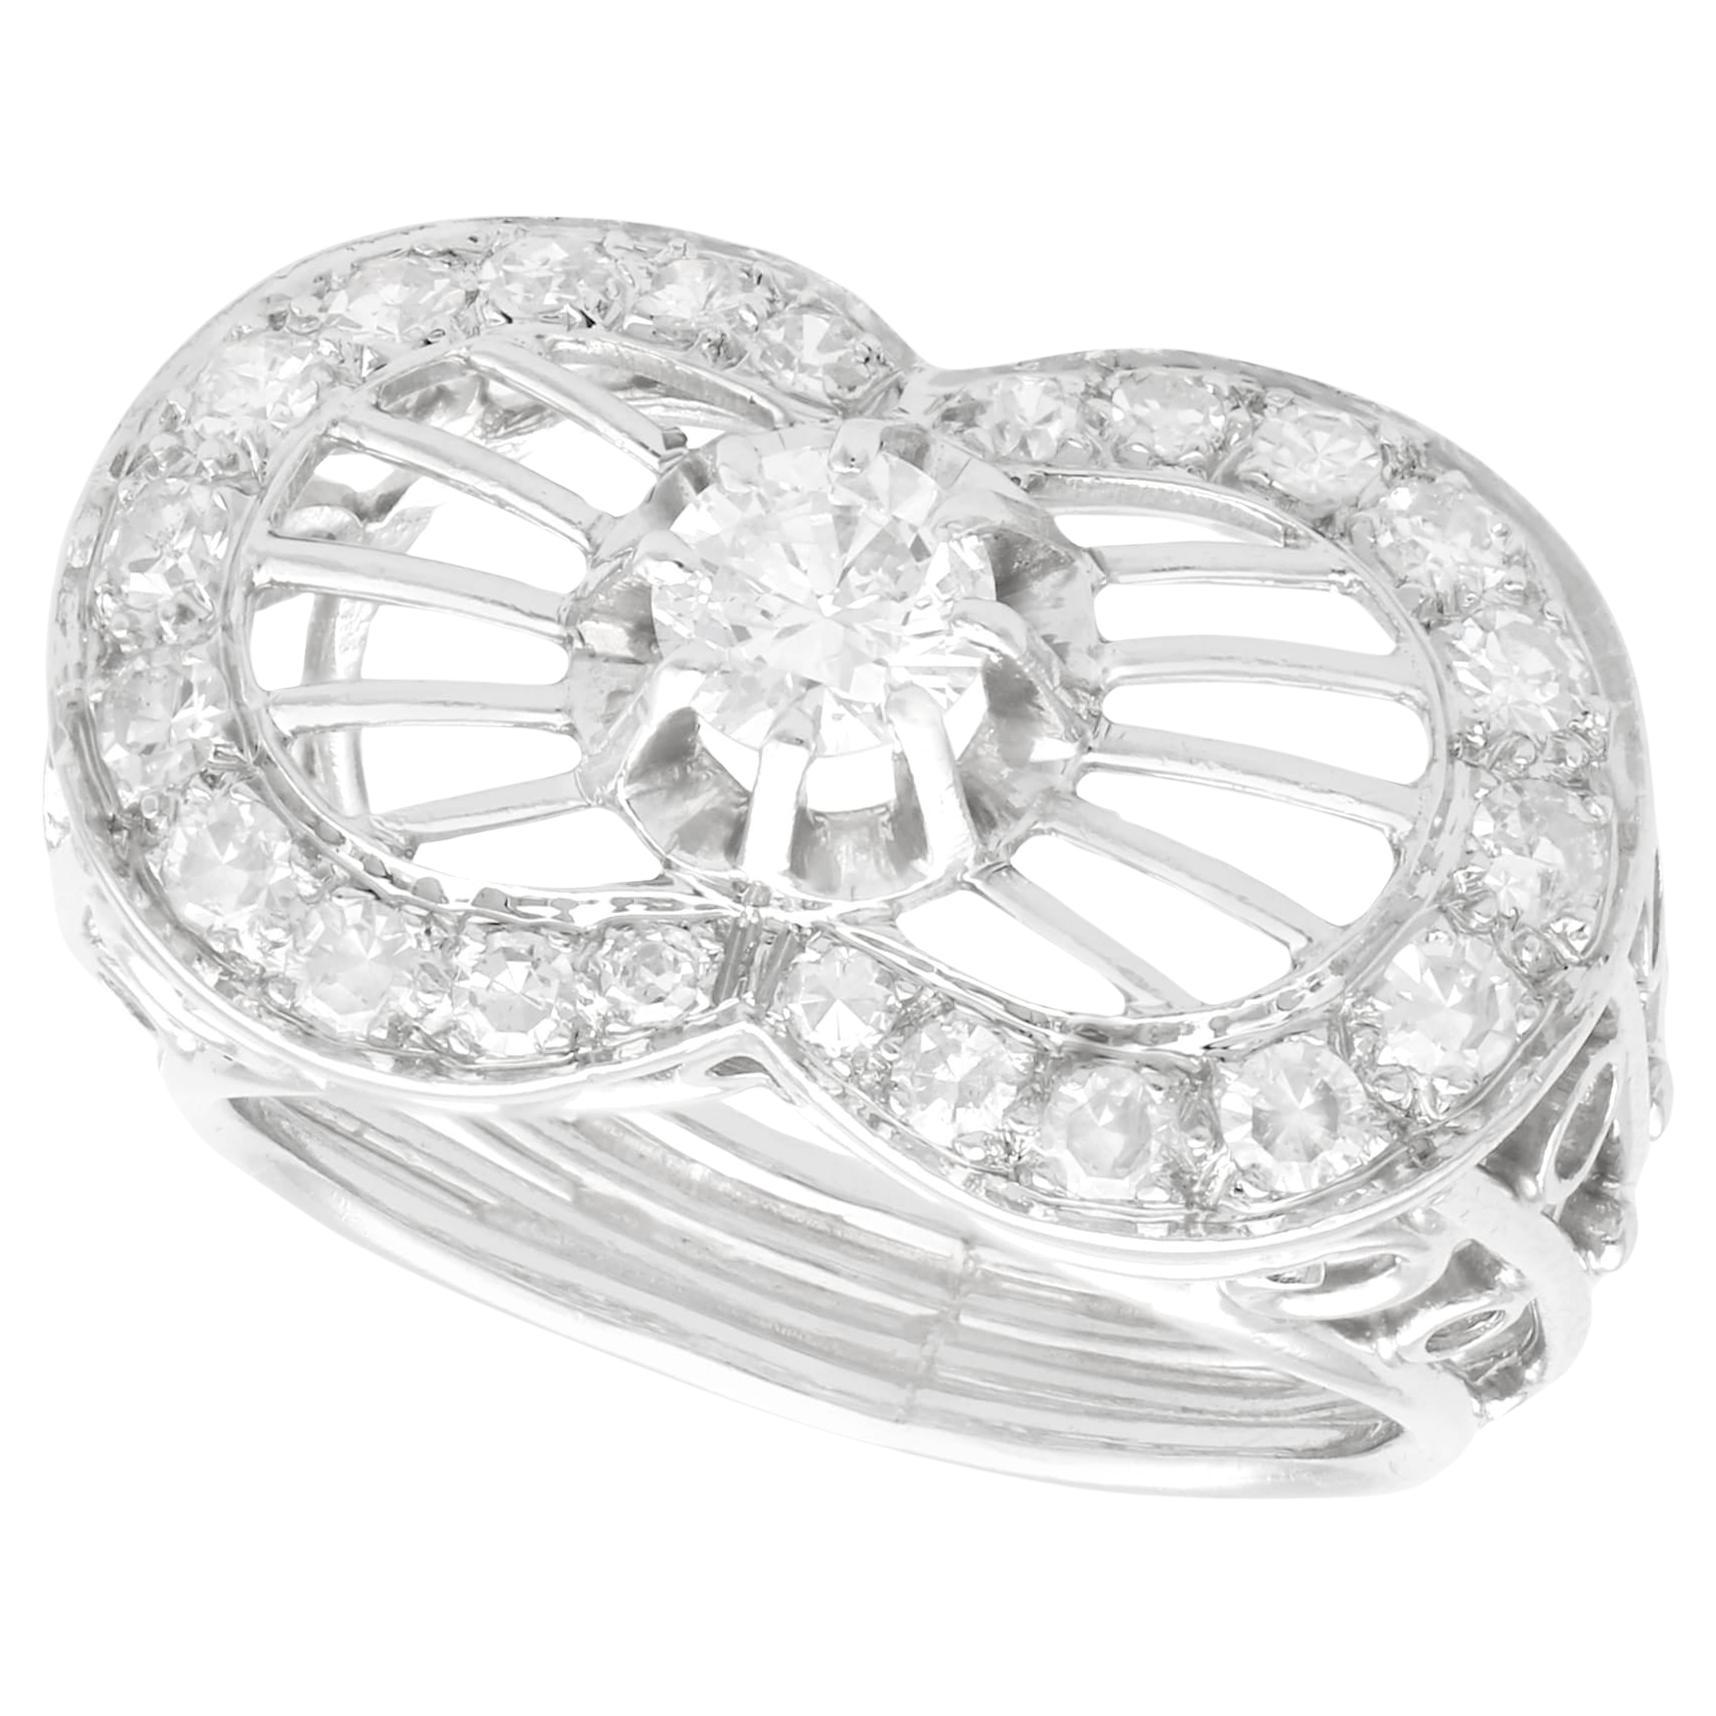 1940s, 1.06 Carat Diamond and Platinum Cocktail Ring